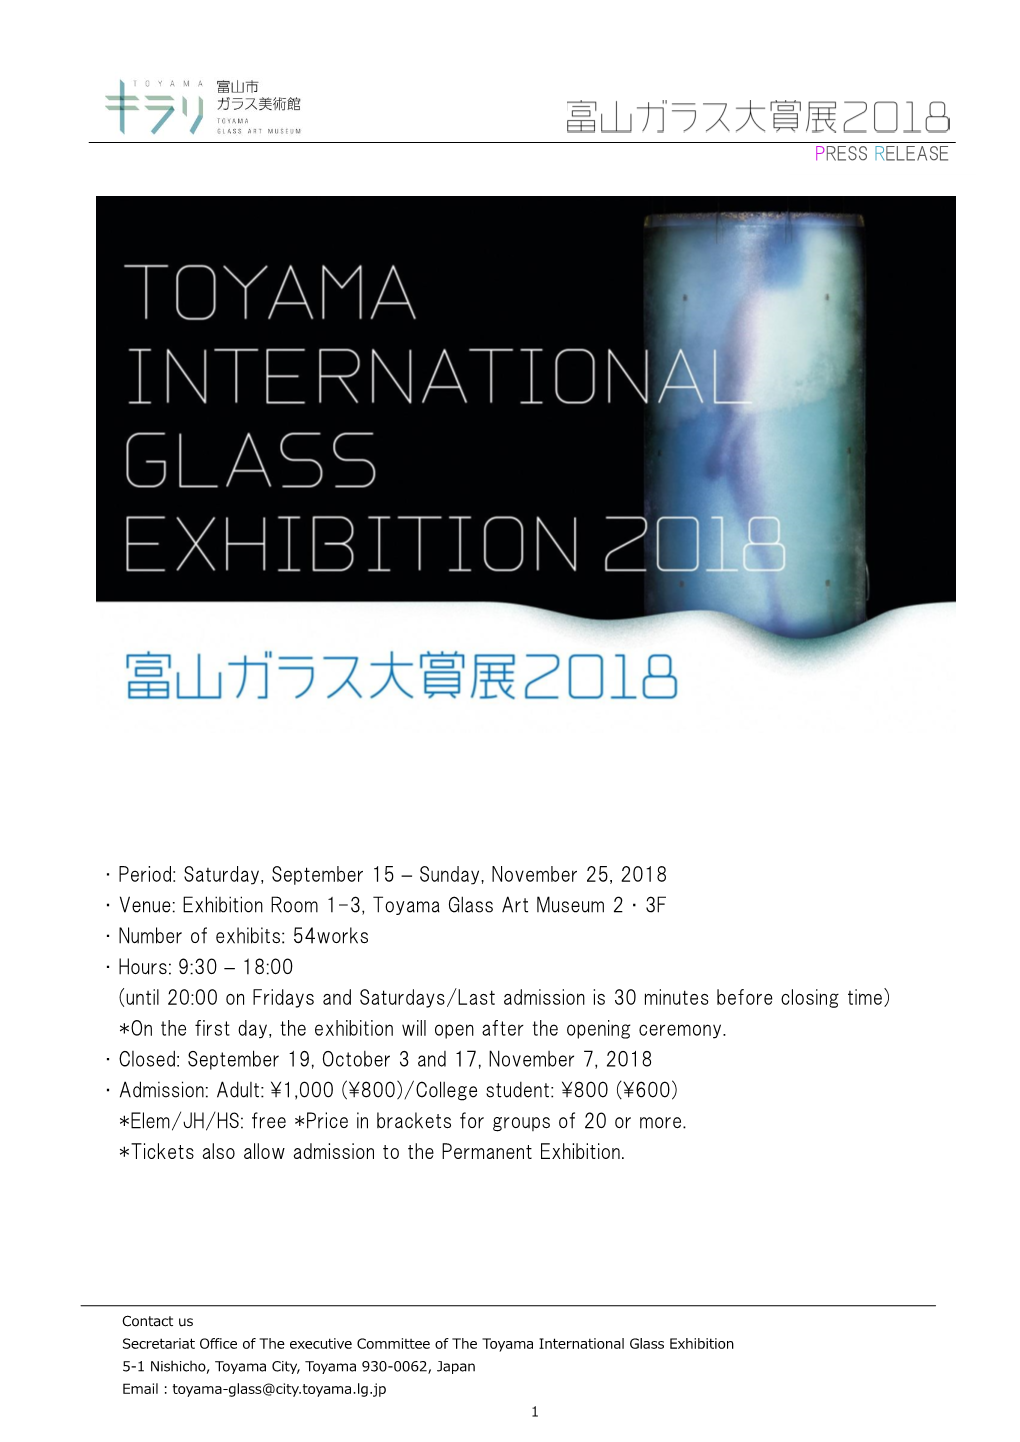 Toyama International Glass Exhibition 2018 Press Release